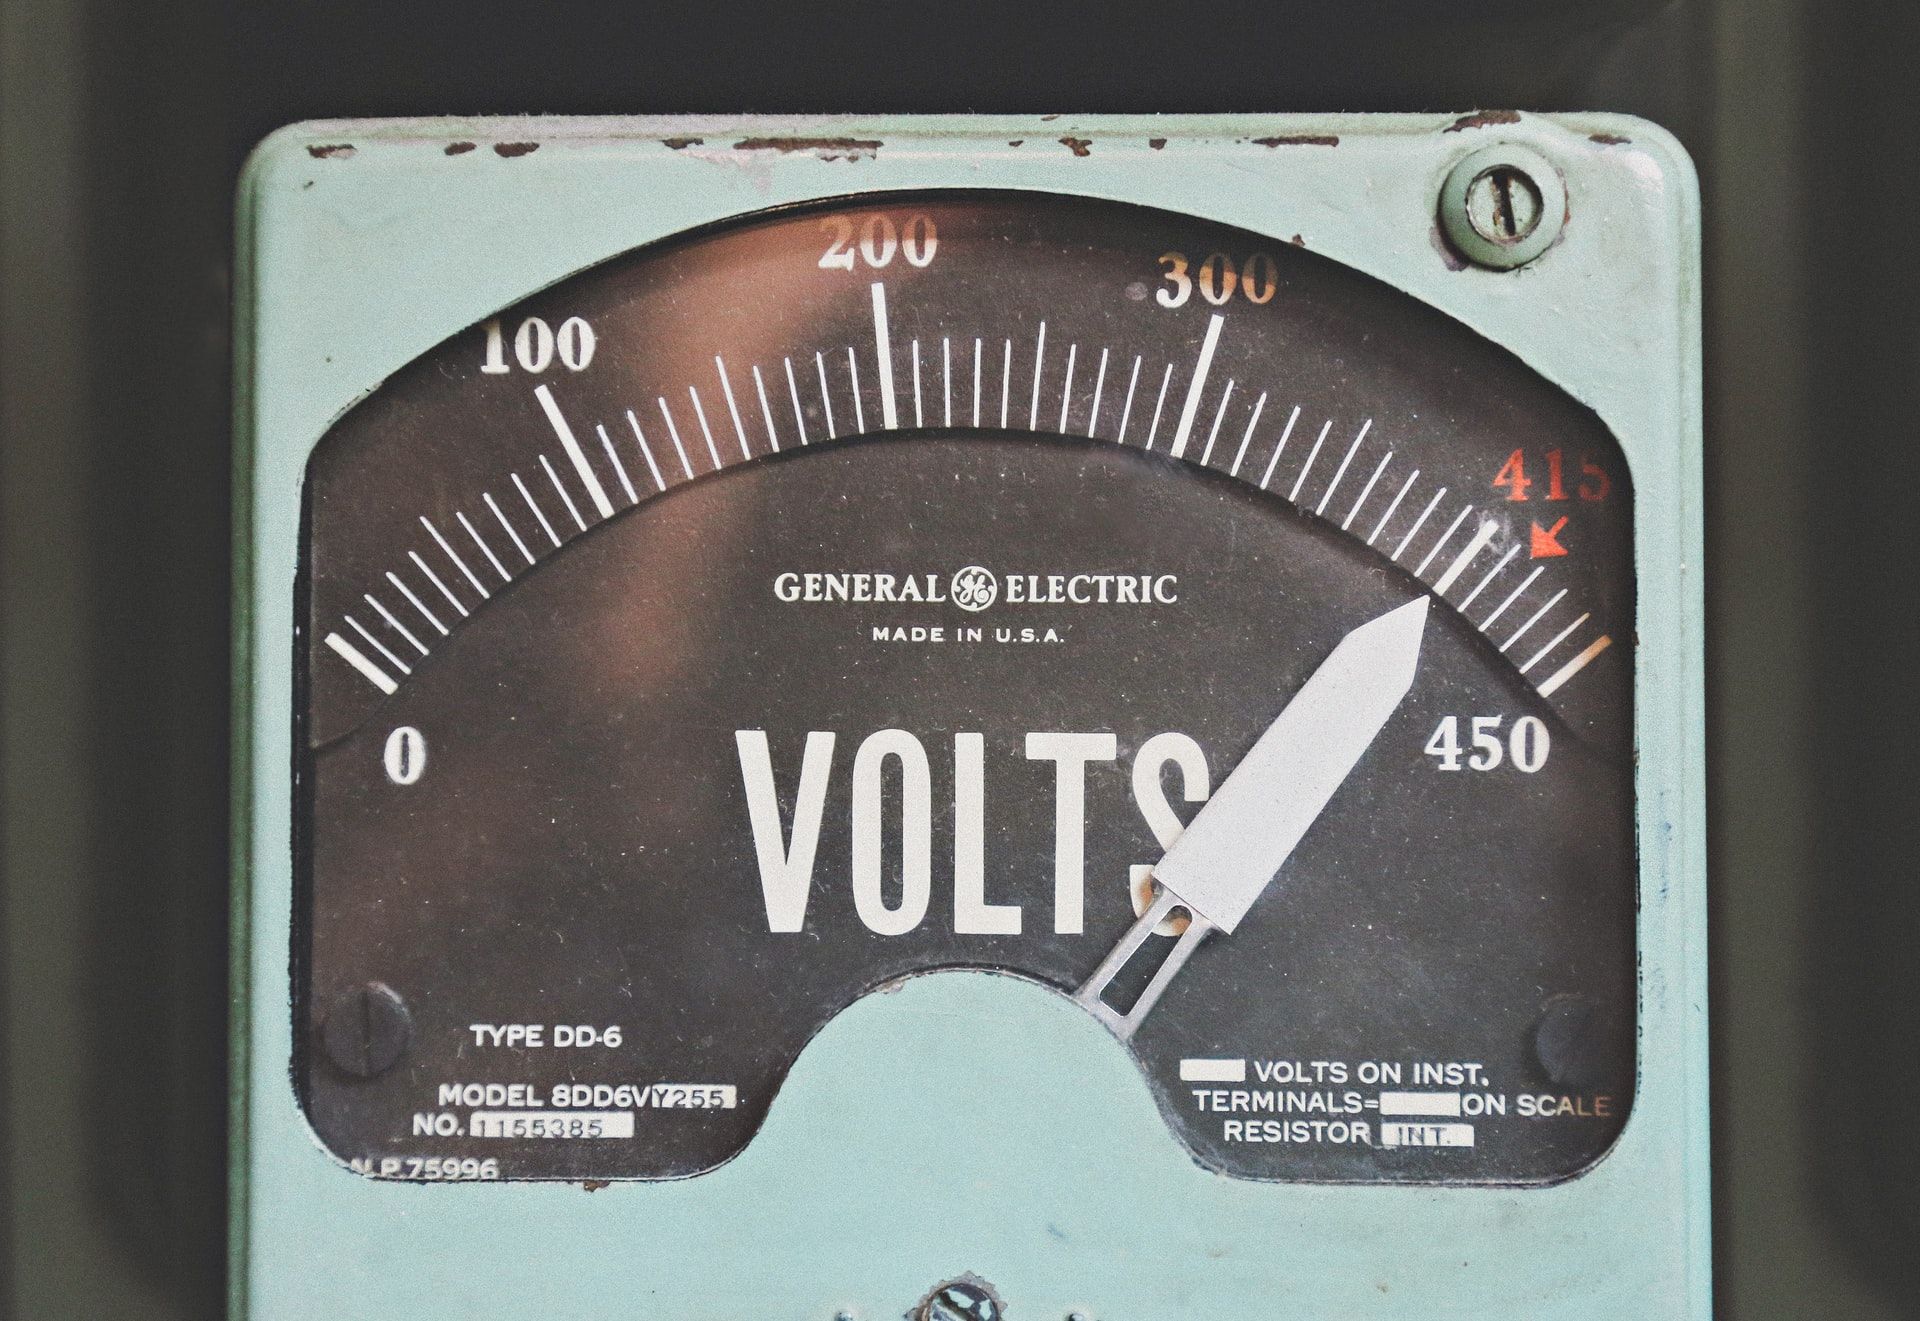 Image of an analog GE electrical meter